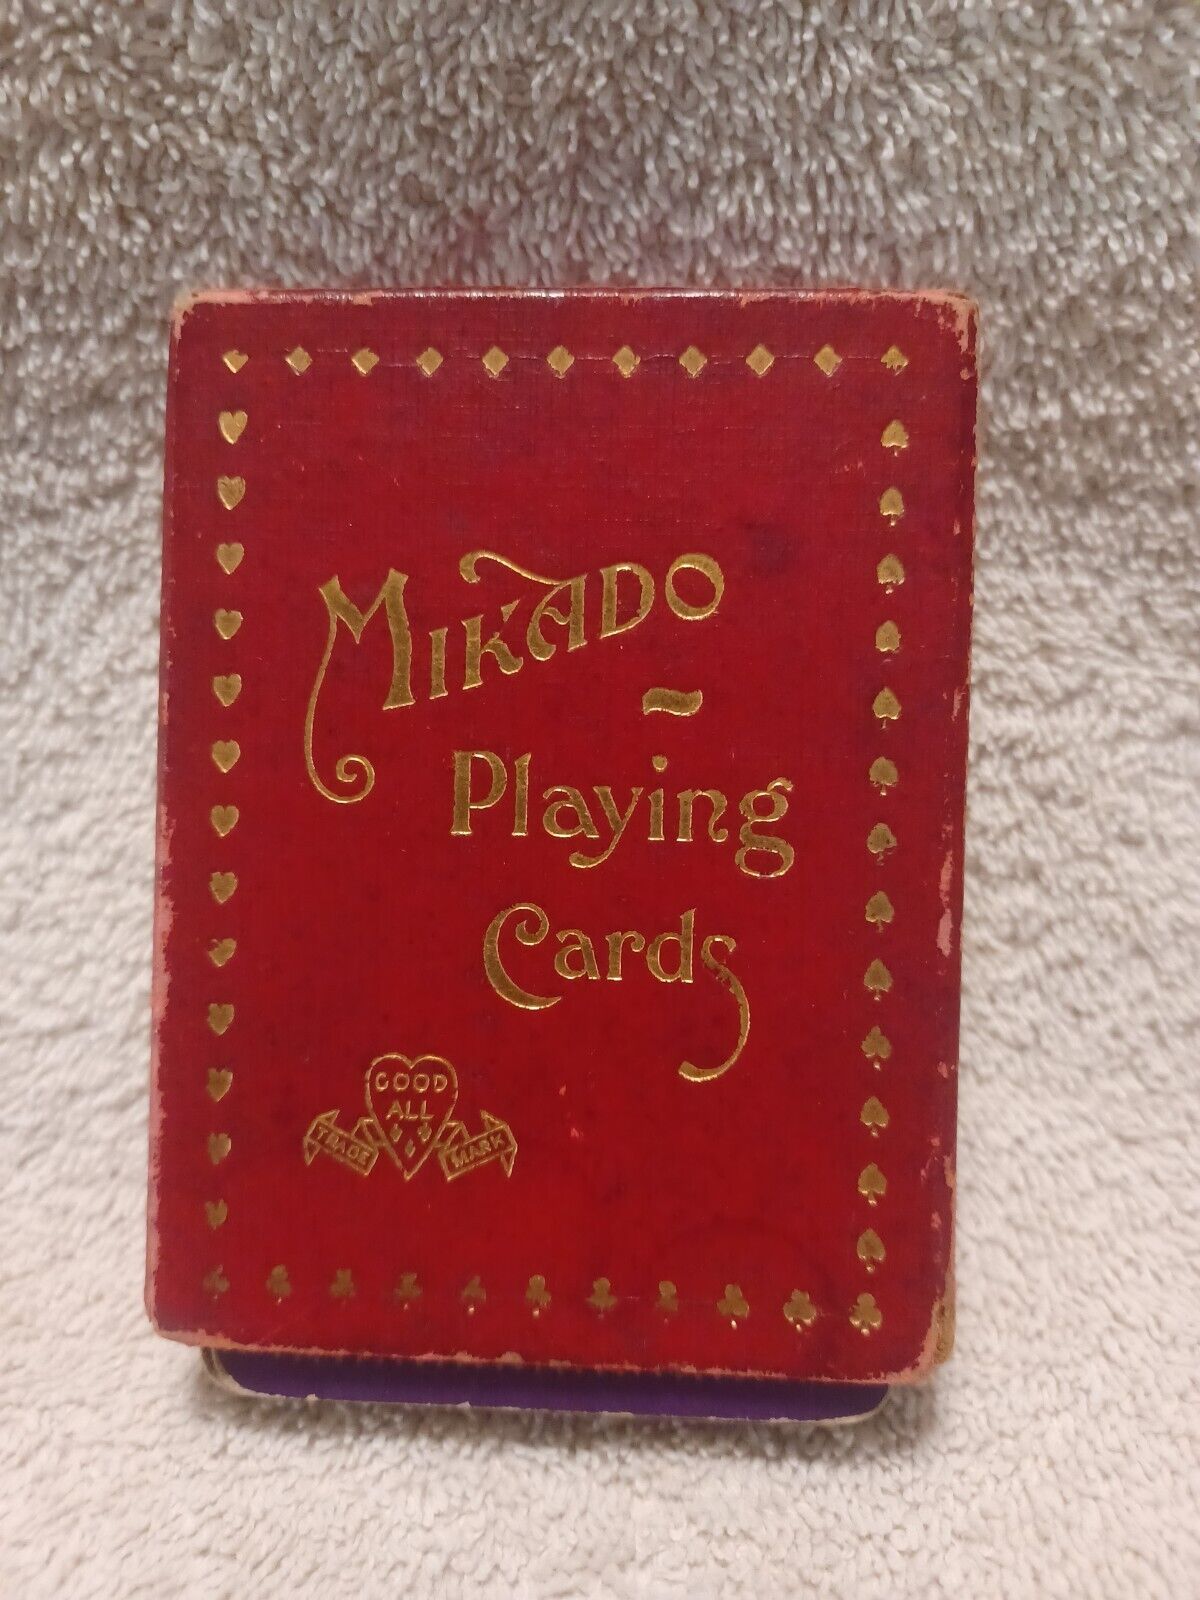 Vintage Mikado Playing Cards - London: Goodall, ca.